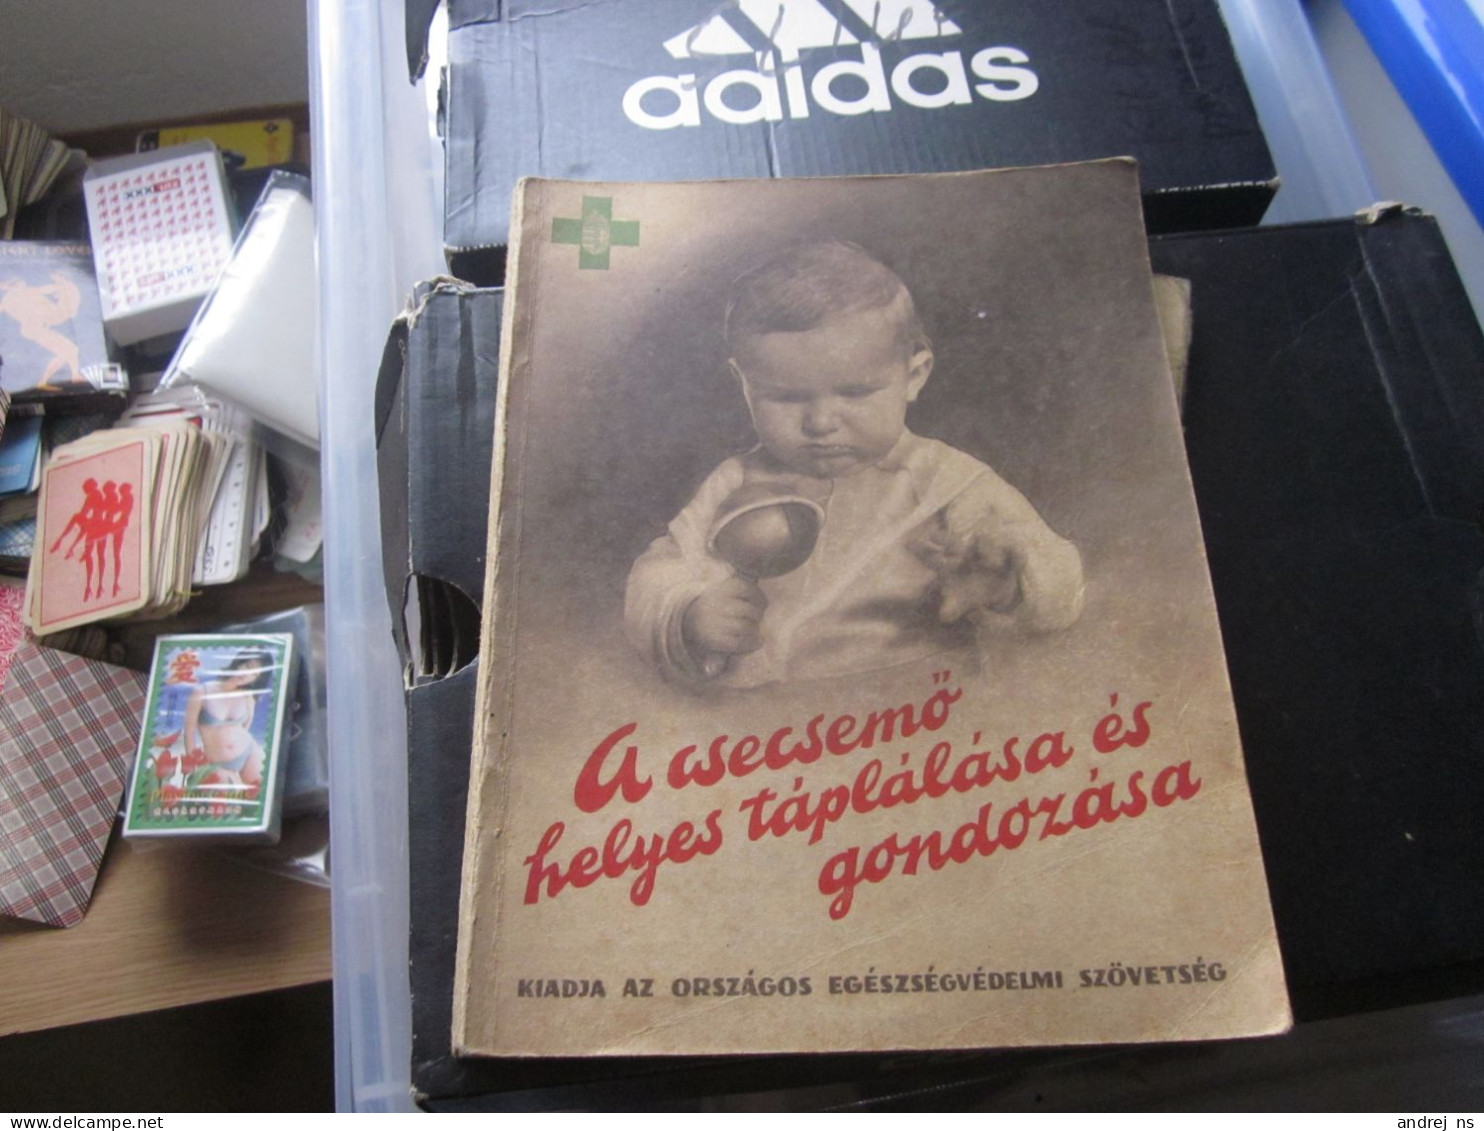 A Csecsemo Helyes Táplálása Es Gondozasa Proper Feeding And Care Of The Baby Budapest 1943 92 Pages - Oude Boeken